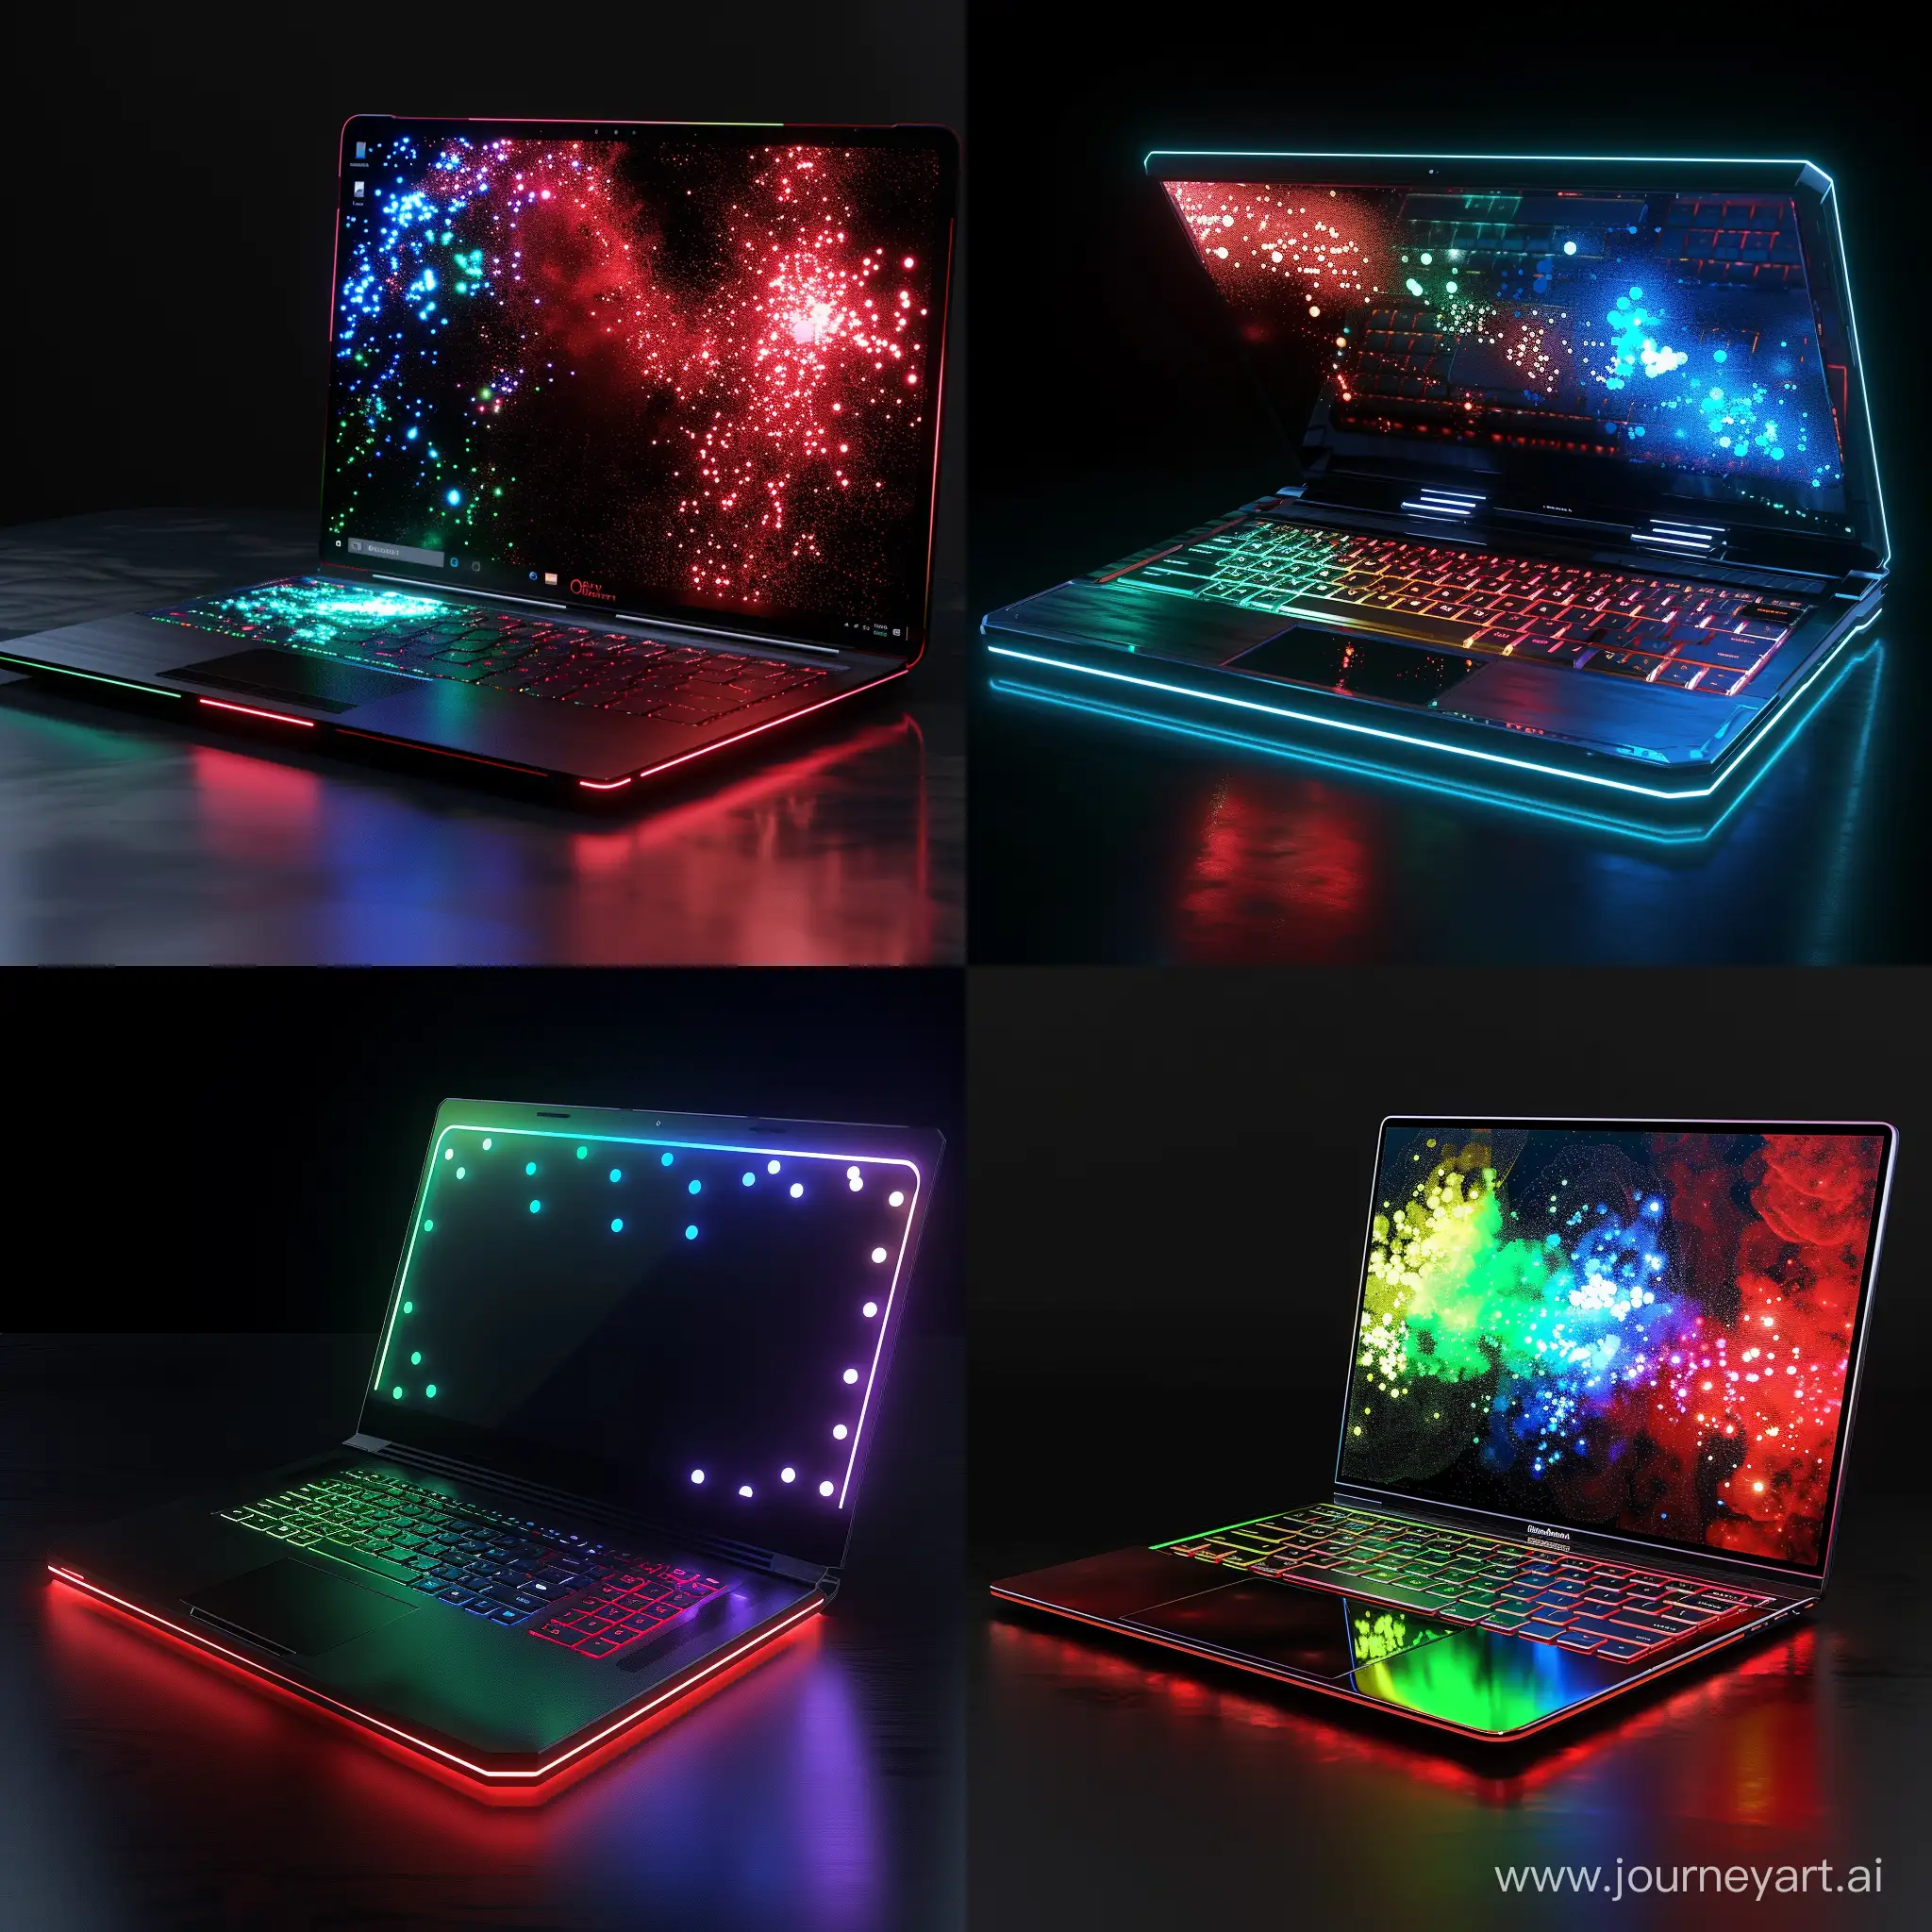 Futuristic laptop, octane render, red LEDs, green LEDs, blue LEDs, OLEDs, quantum dots